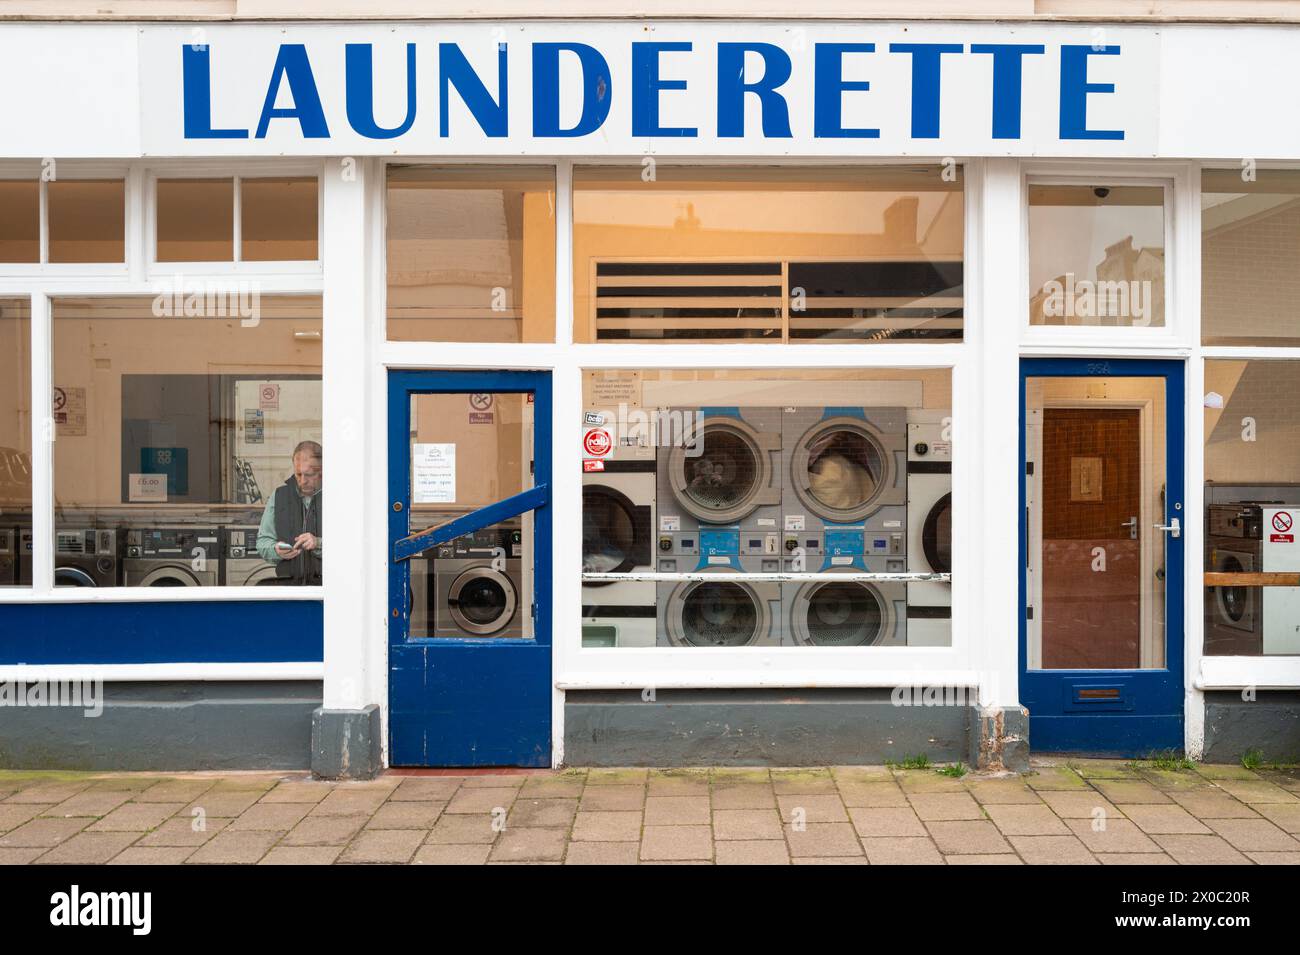 Launderette exterior in Teignmouth, Devon, England. Colour photography. Stock Photo